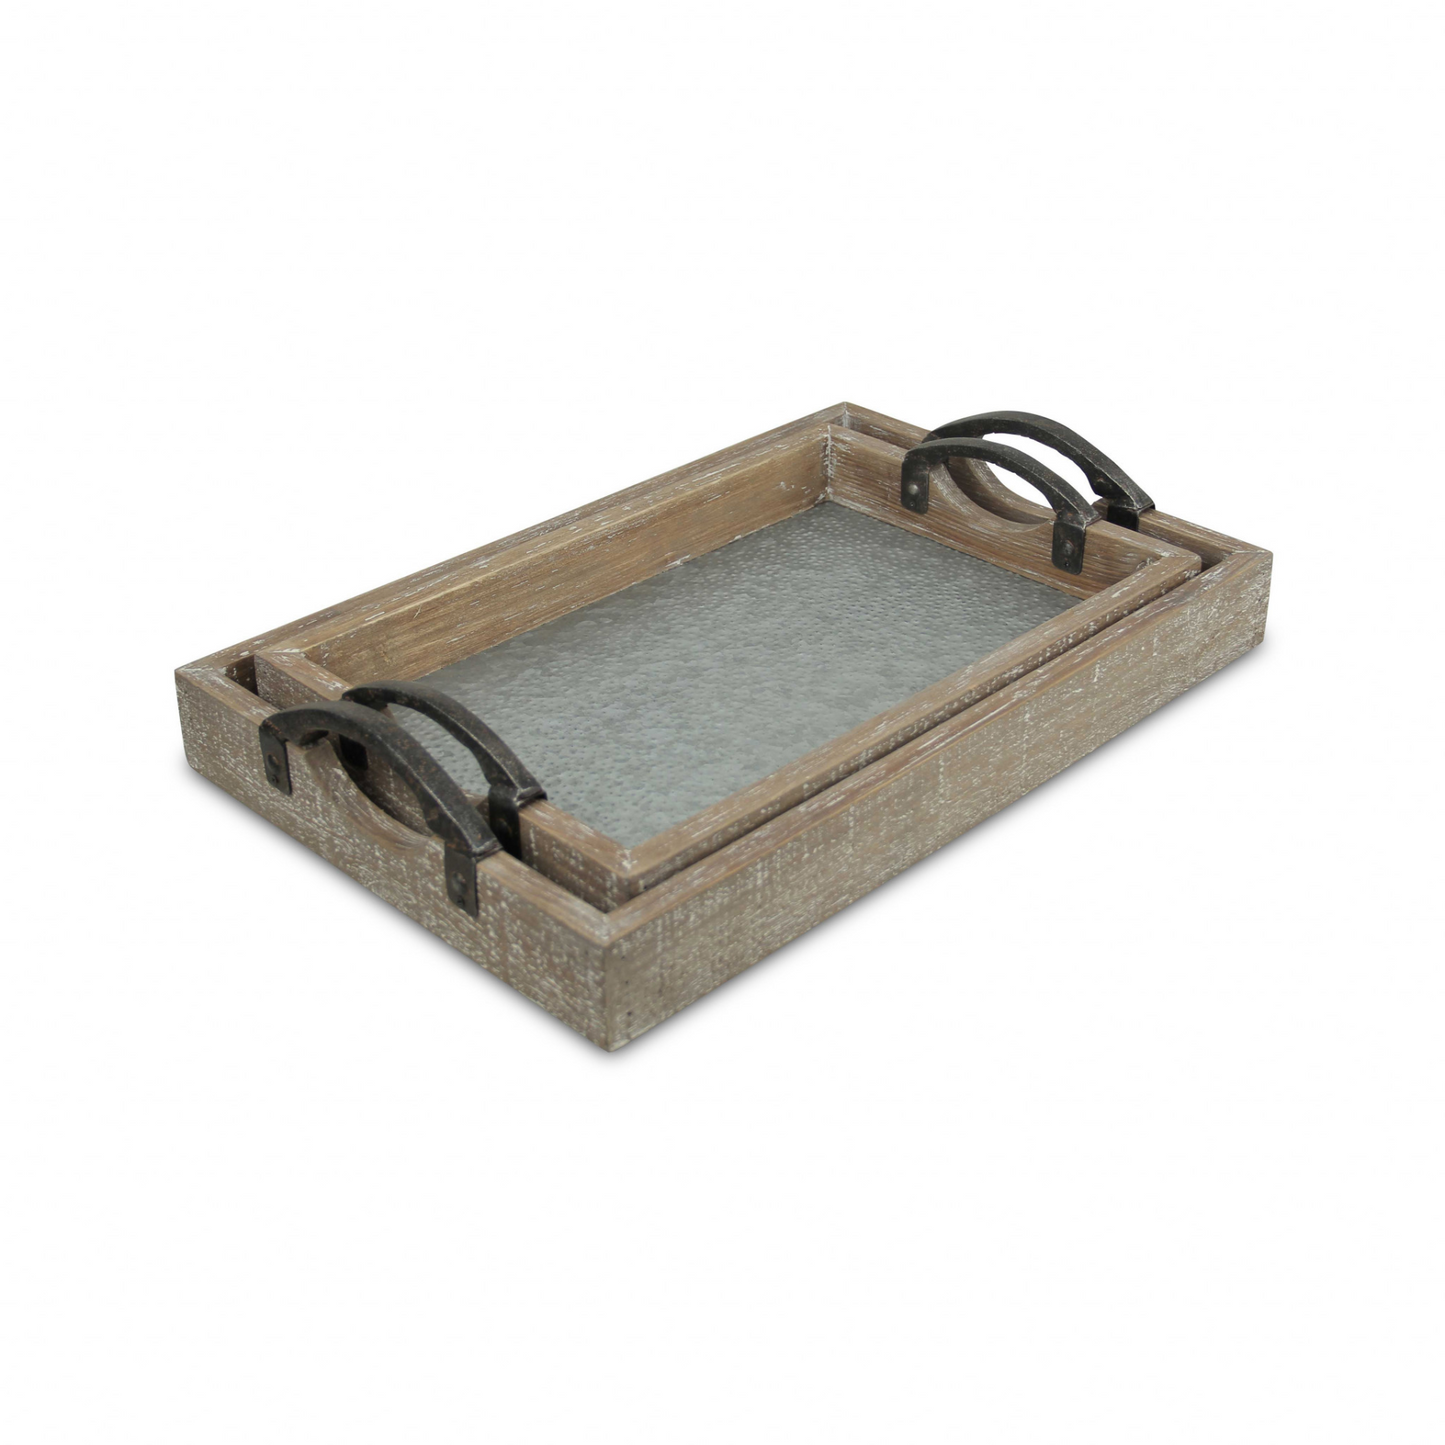 19" Gray Rectangular Metal Handmade Tray With Handles - Versatile and Stylish